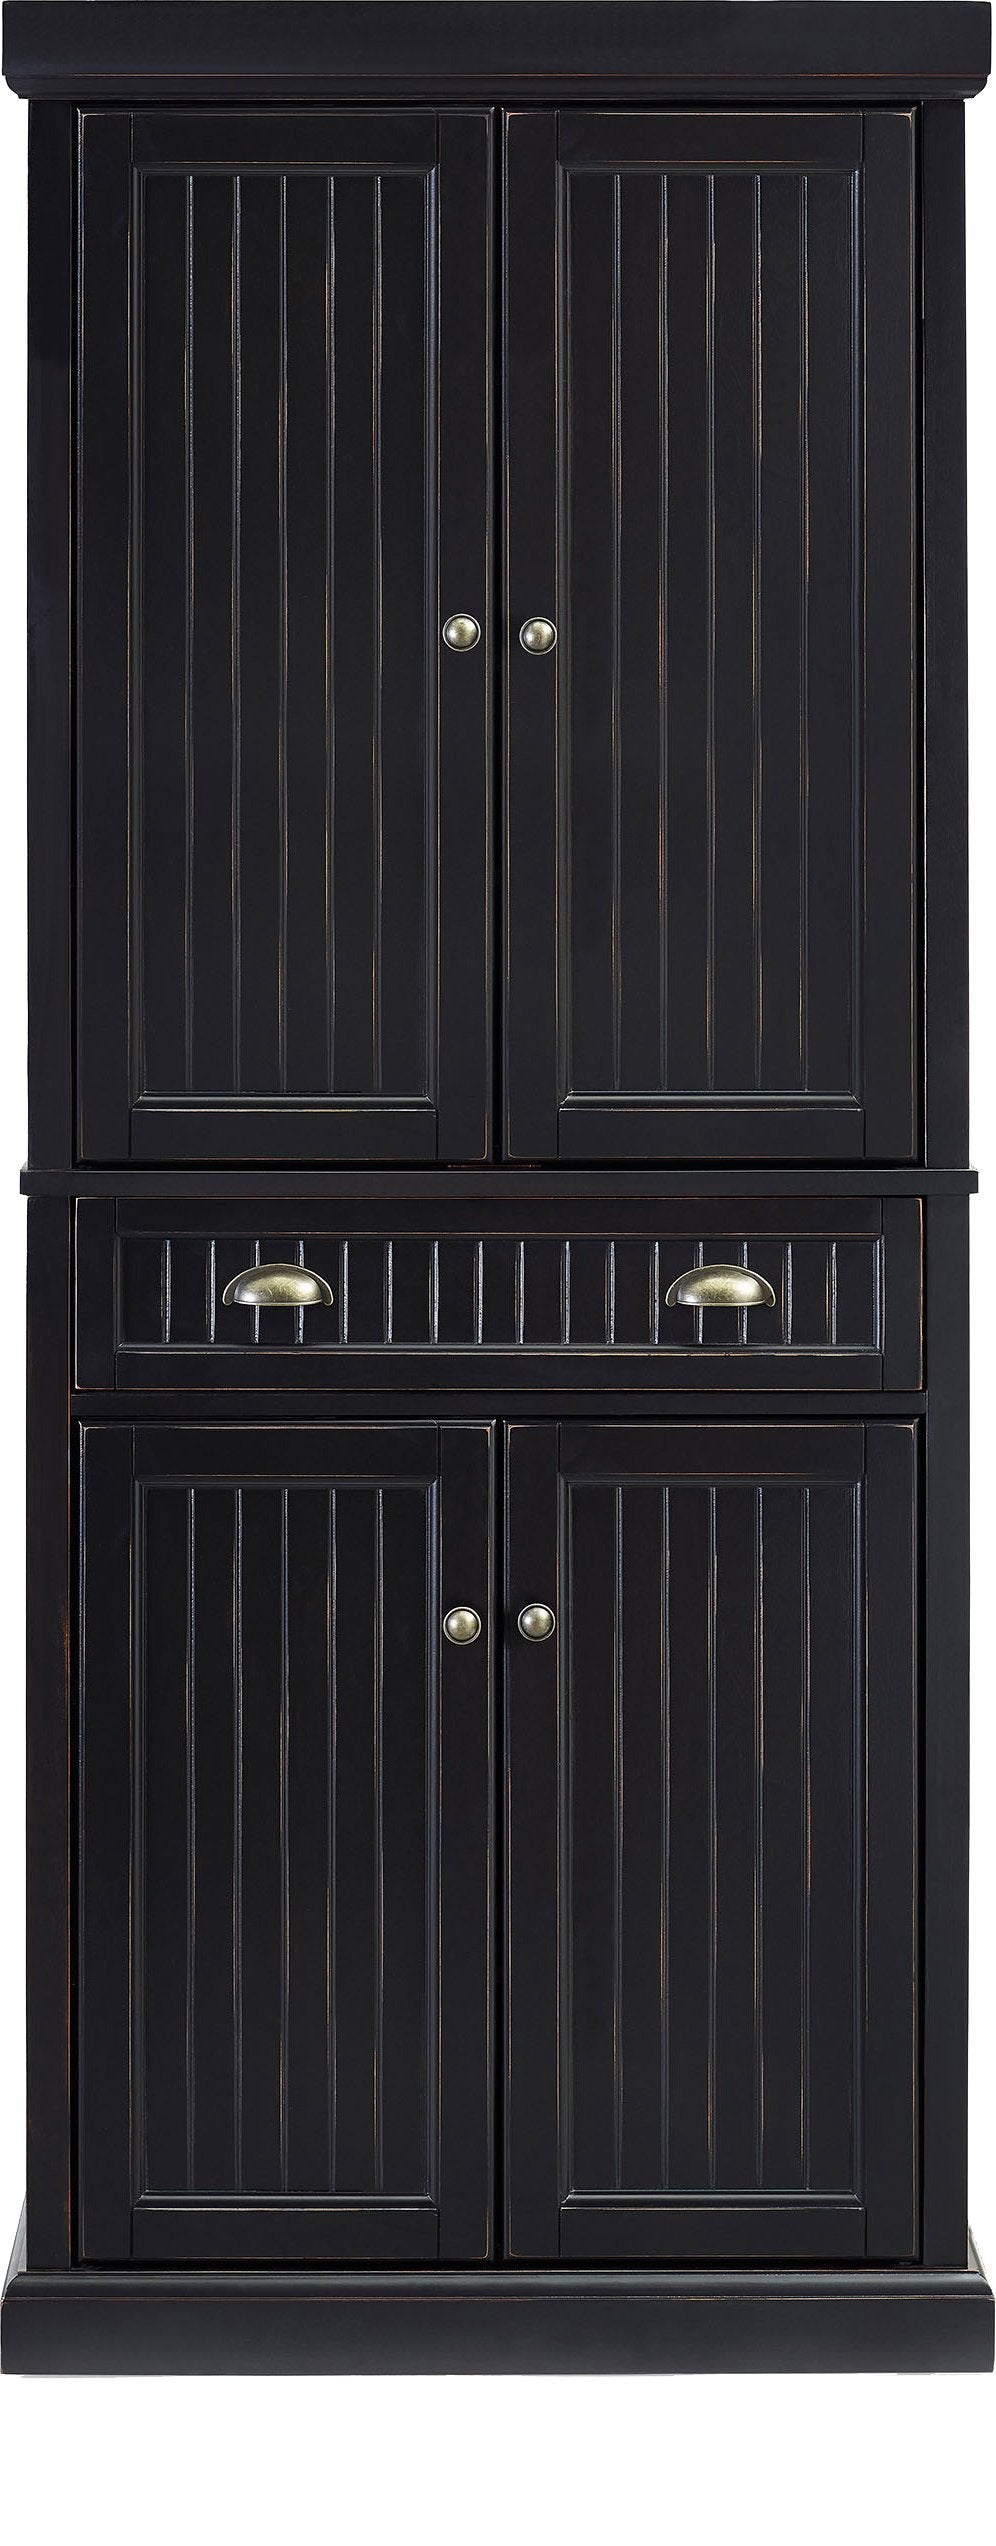 The best crosley furniture seaside kitchen pantry cabinet distressed black